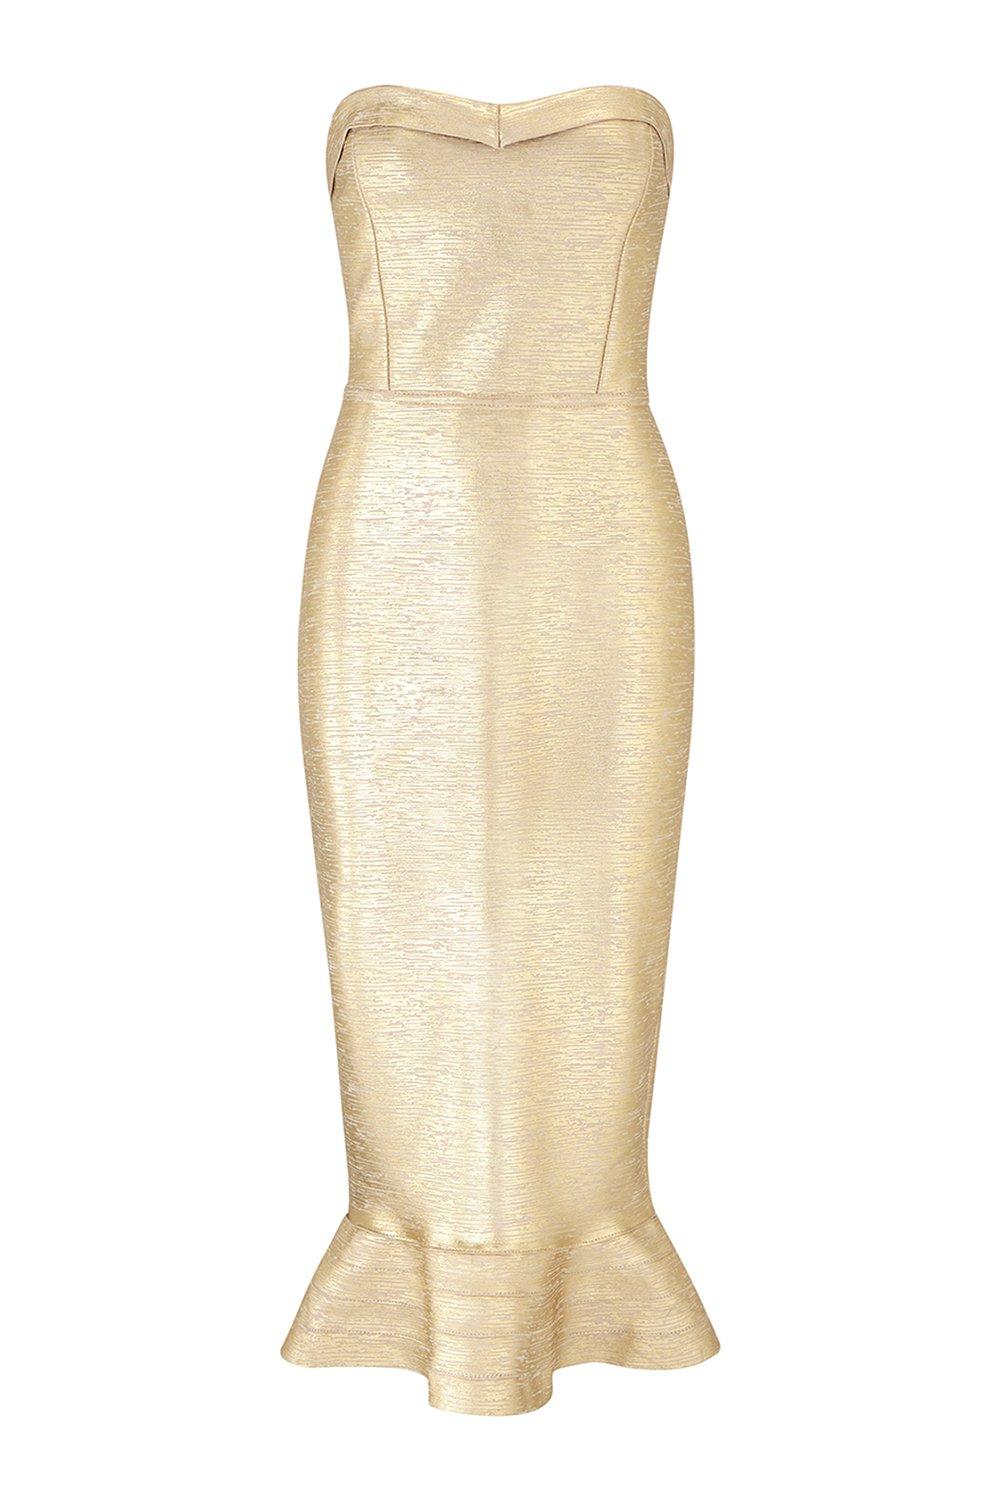 gold metal dress